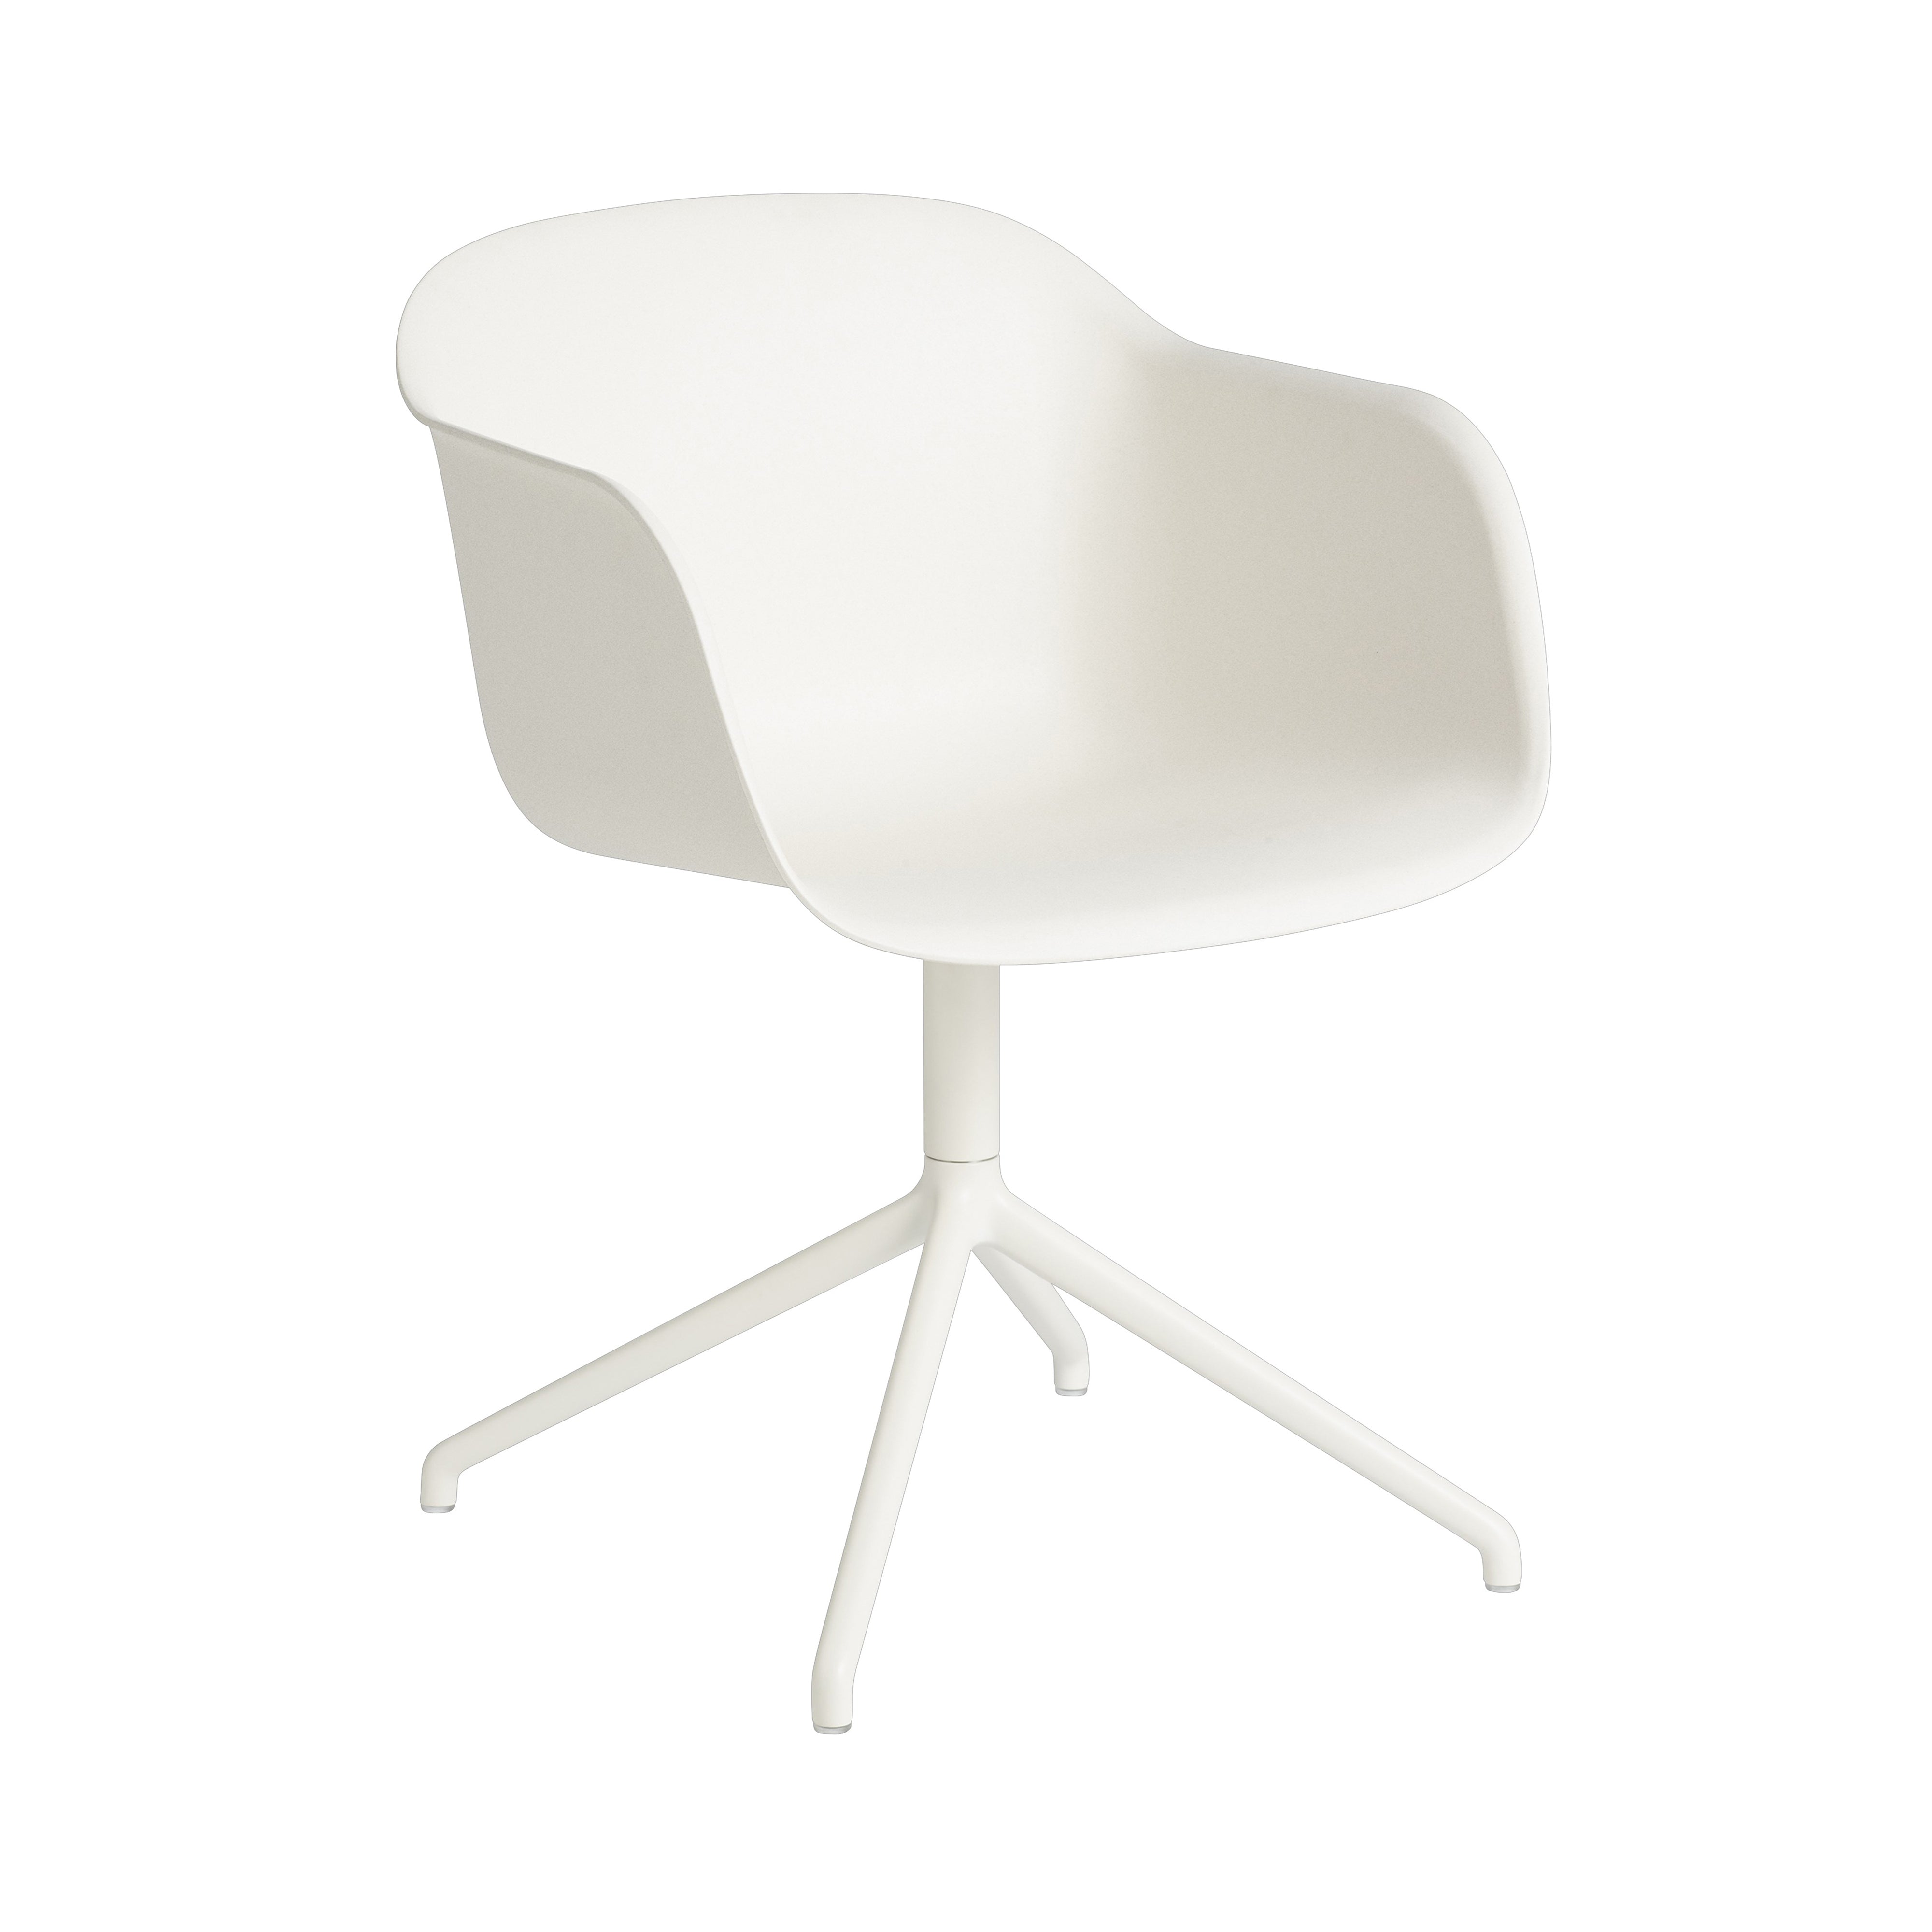 Fiber Armchair: Swivel Base + Recycled Shell + White + Natural White